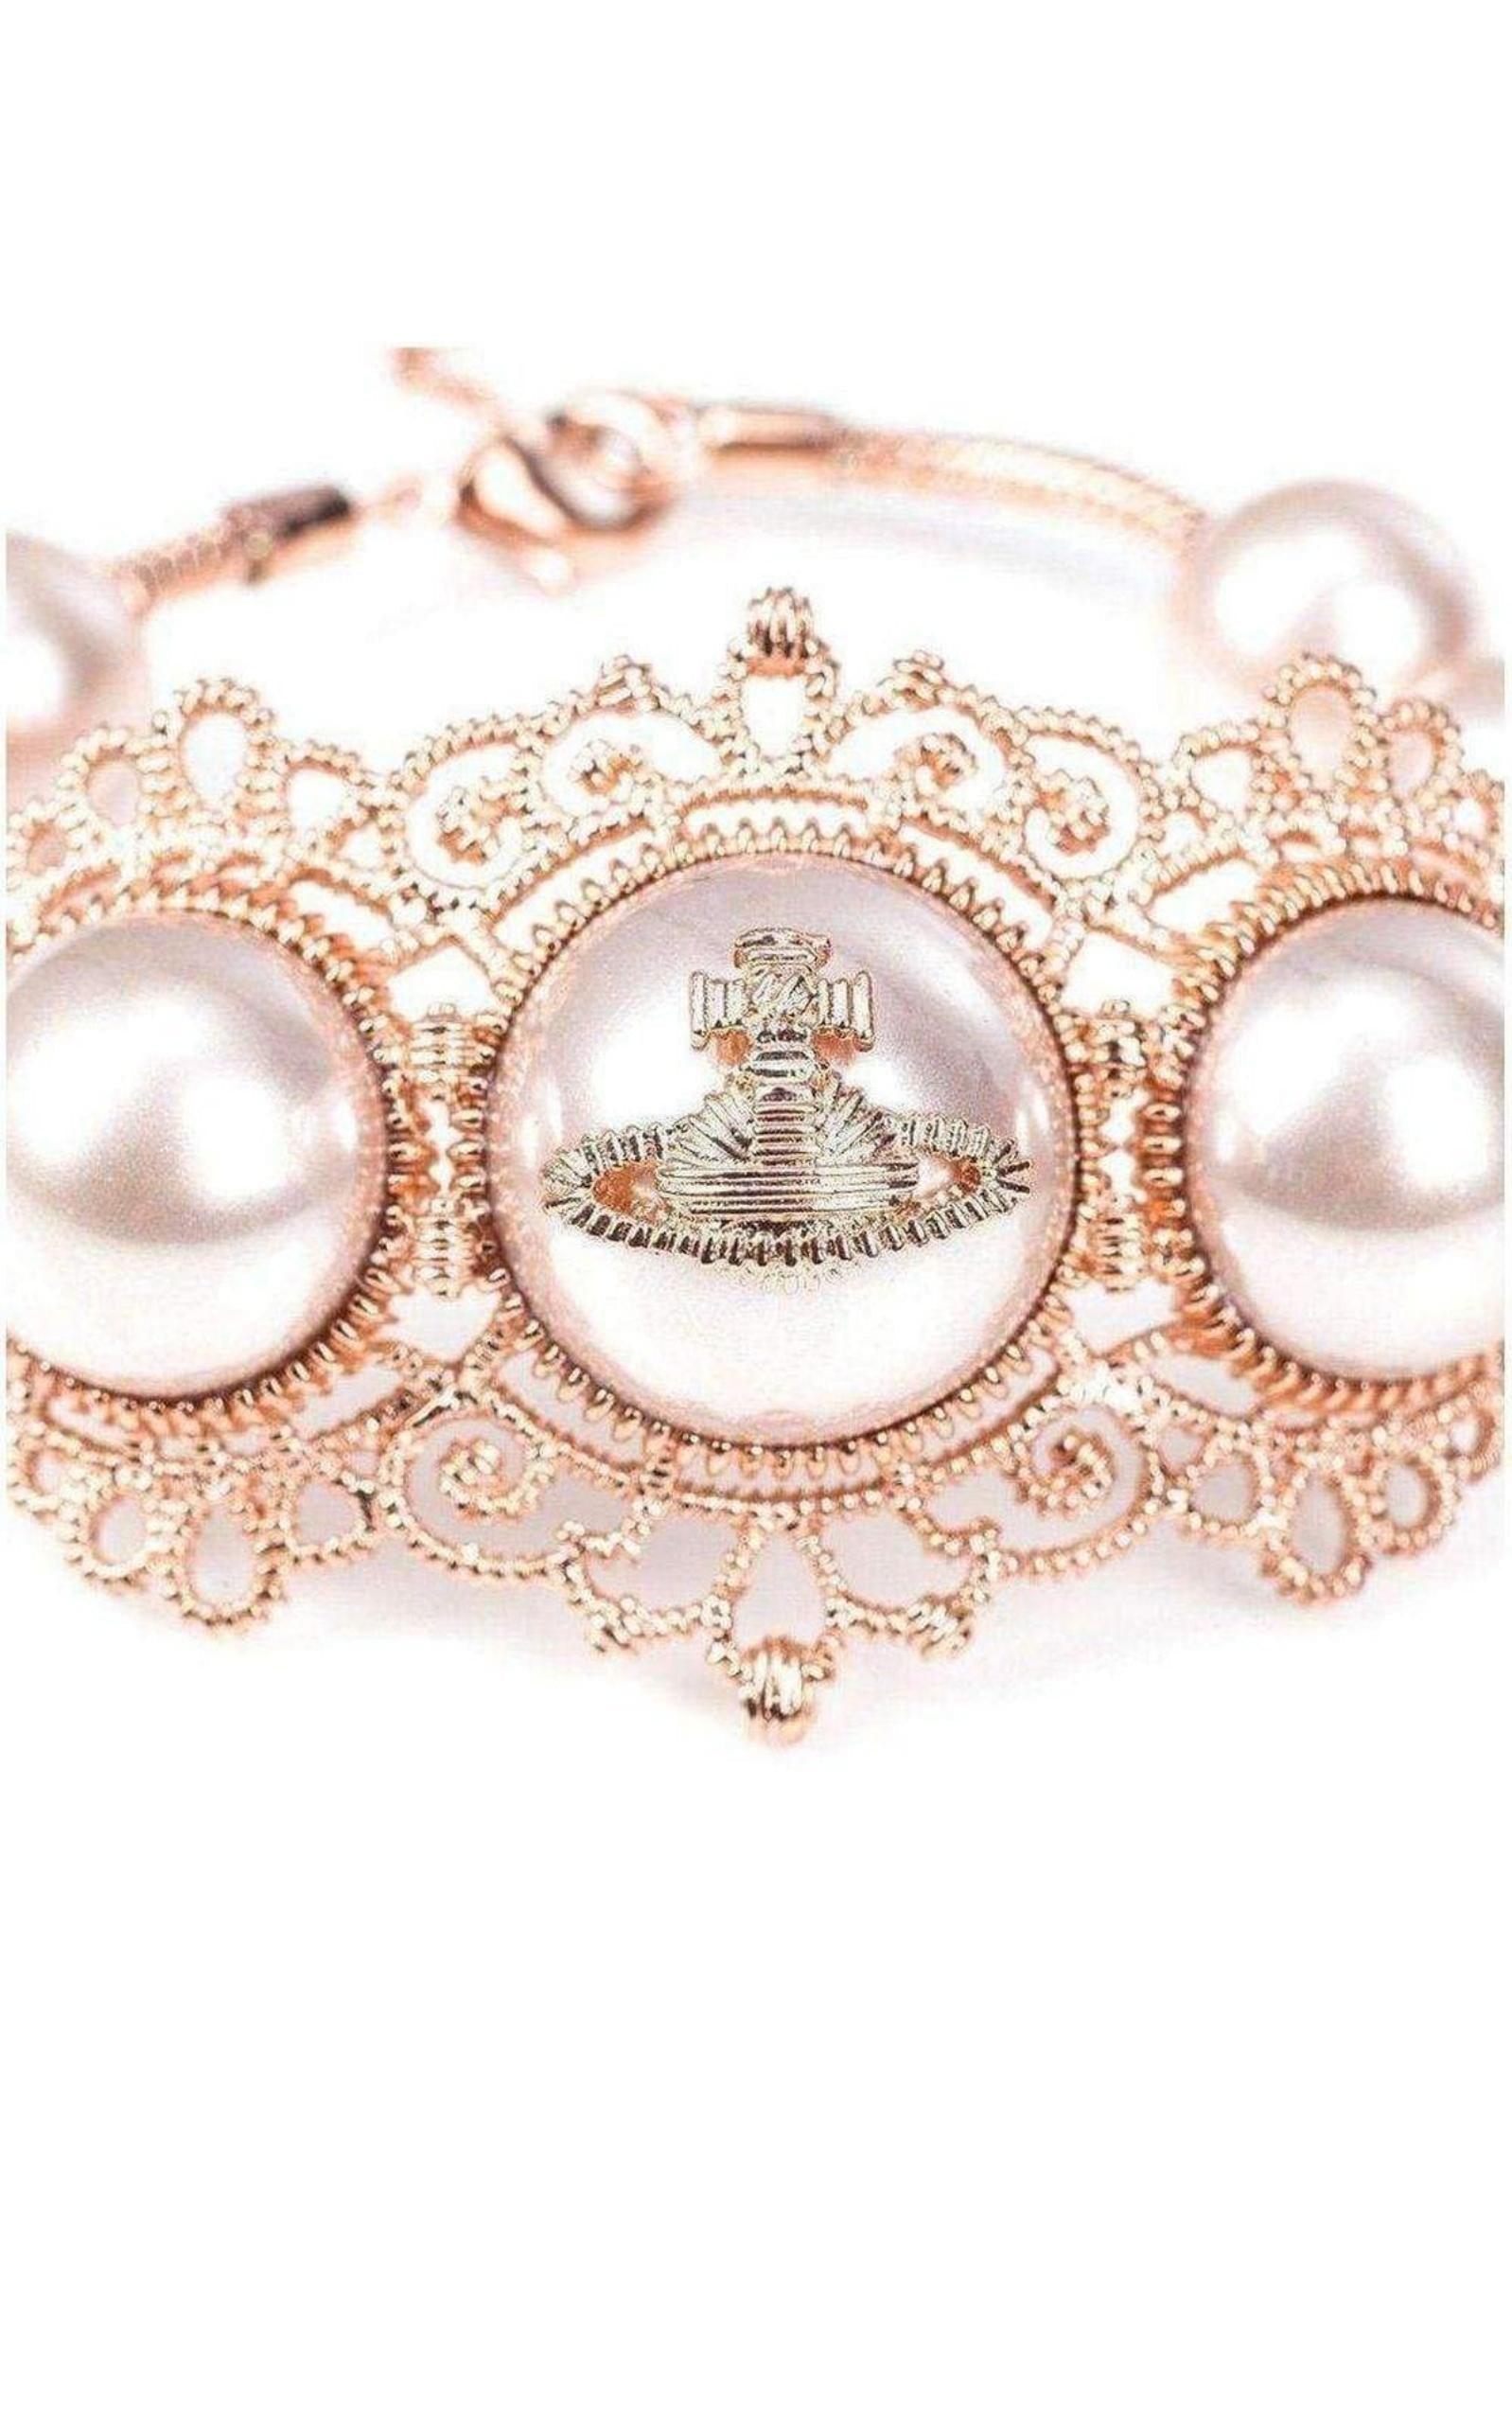  Vivienne WestwoodIsolde Large Pearl Pink Gold Bracelet - Runway Catalog